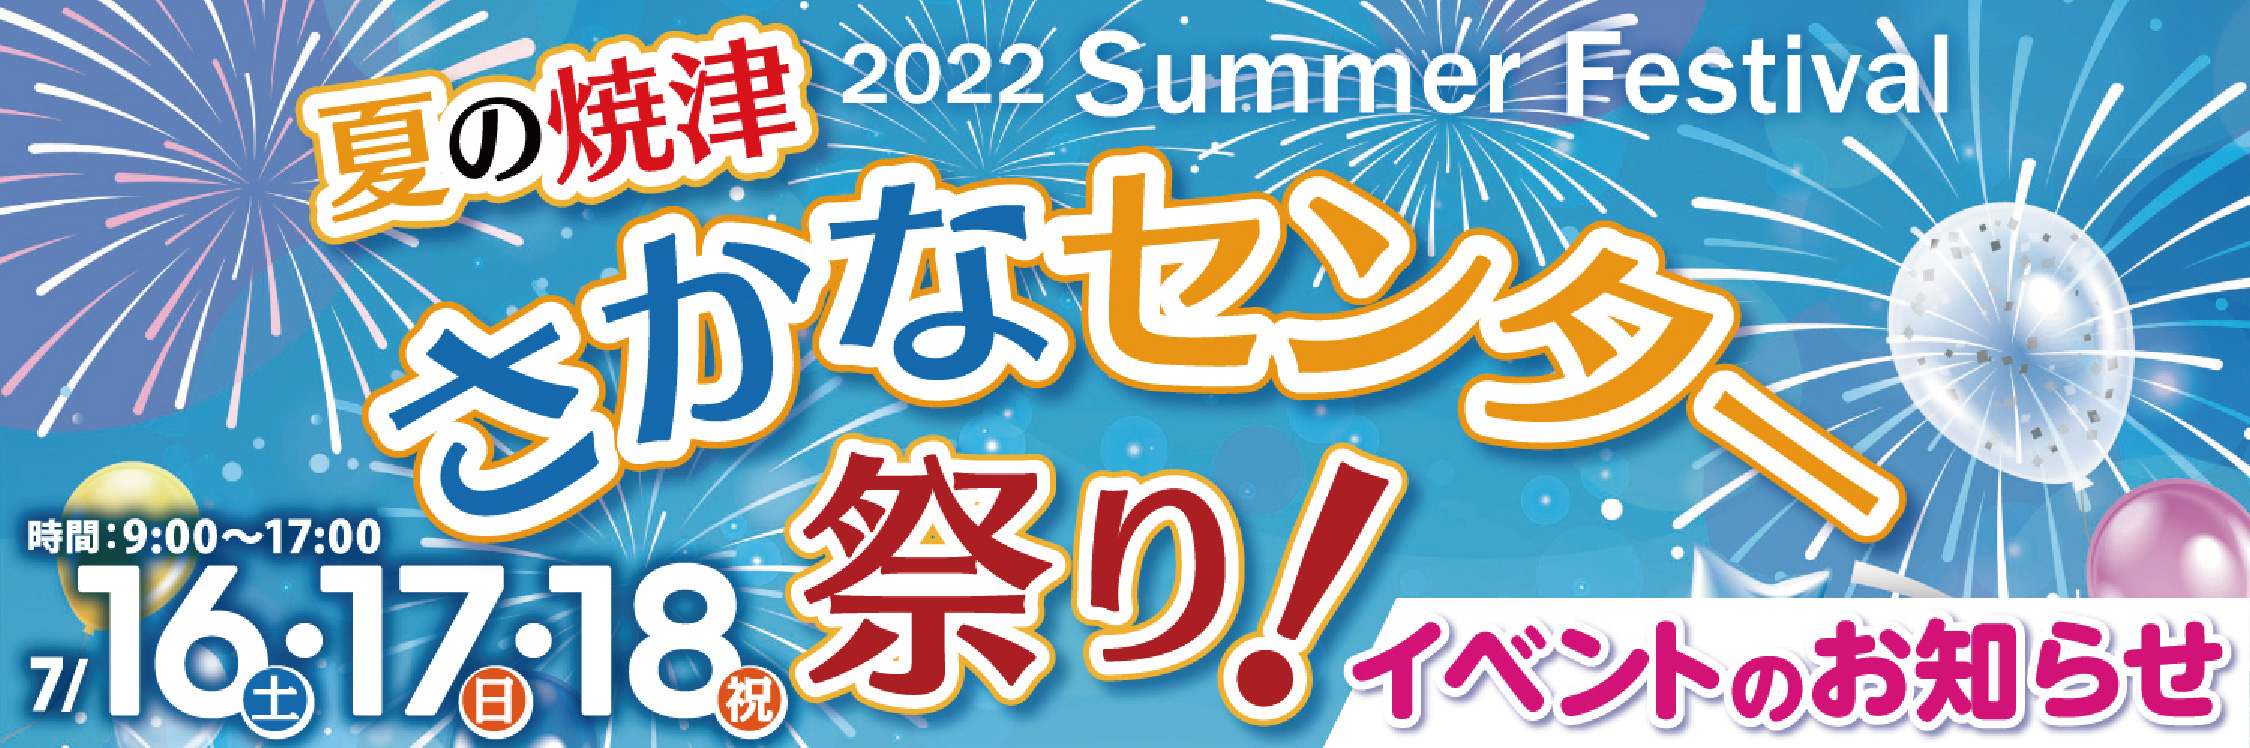 2022 SummerFestival 夏の焼津さかなセンター祭り！7/16土・17日・18祝 時間9:00〜17:00